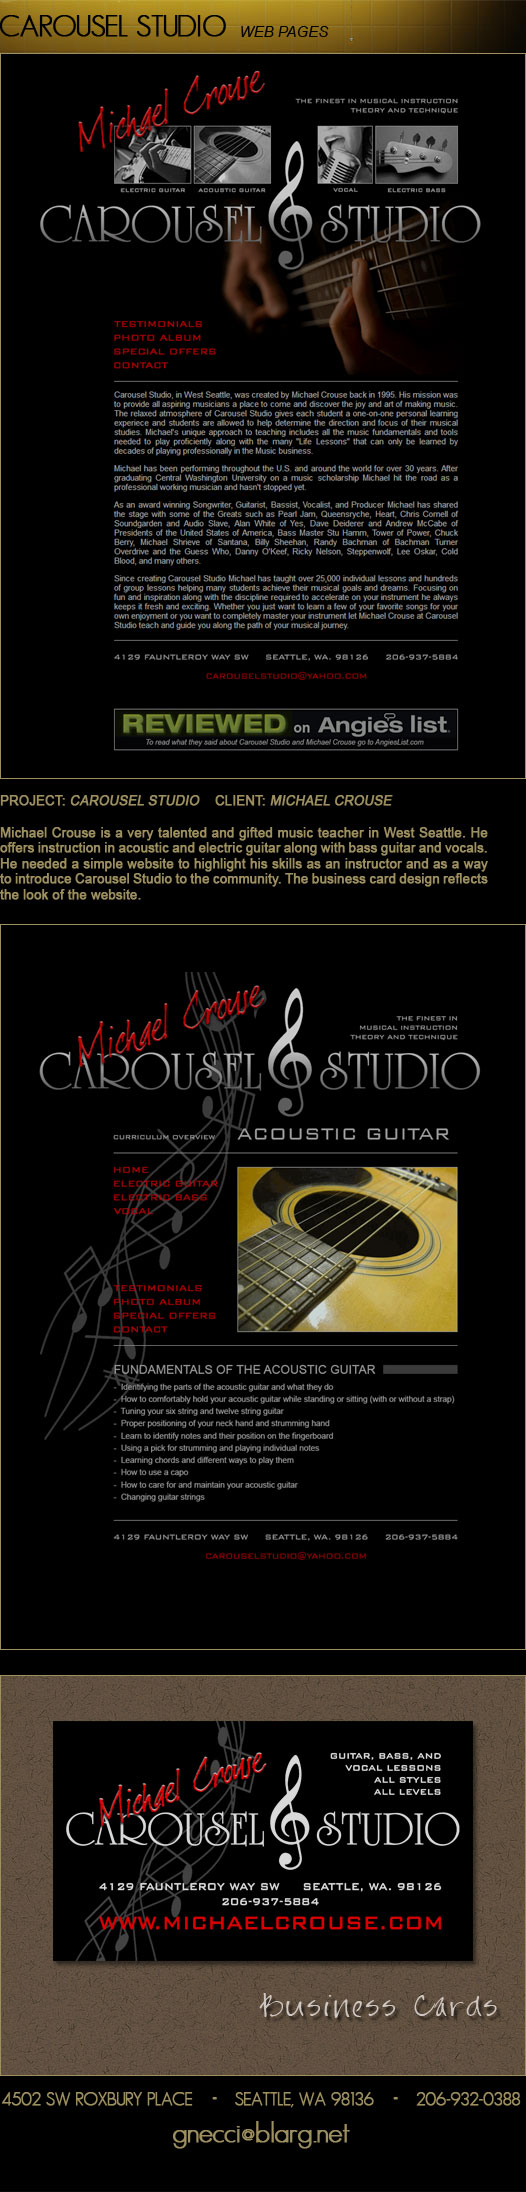 carousel_studio